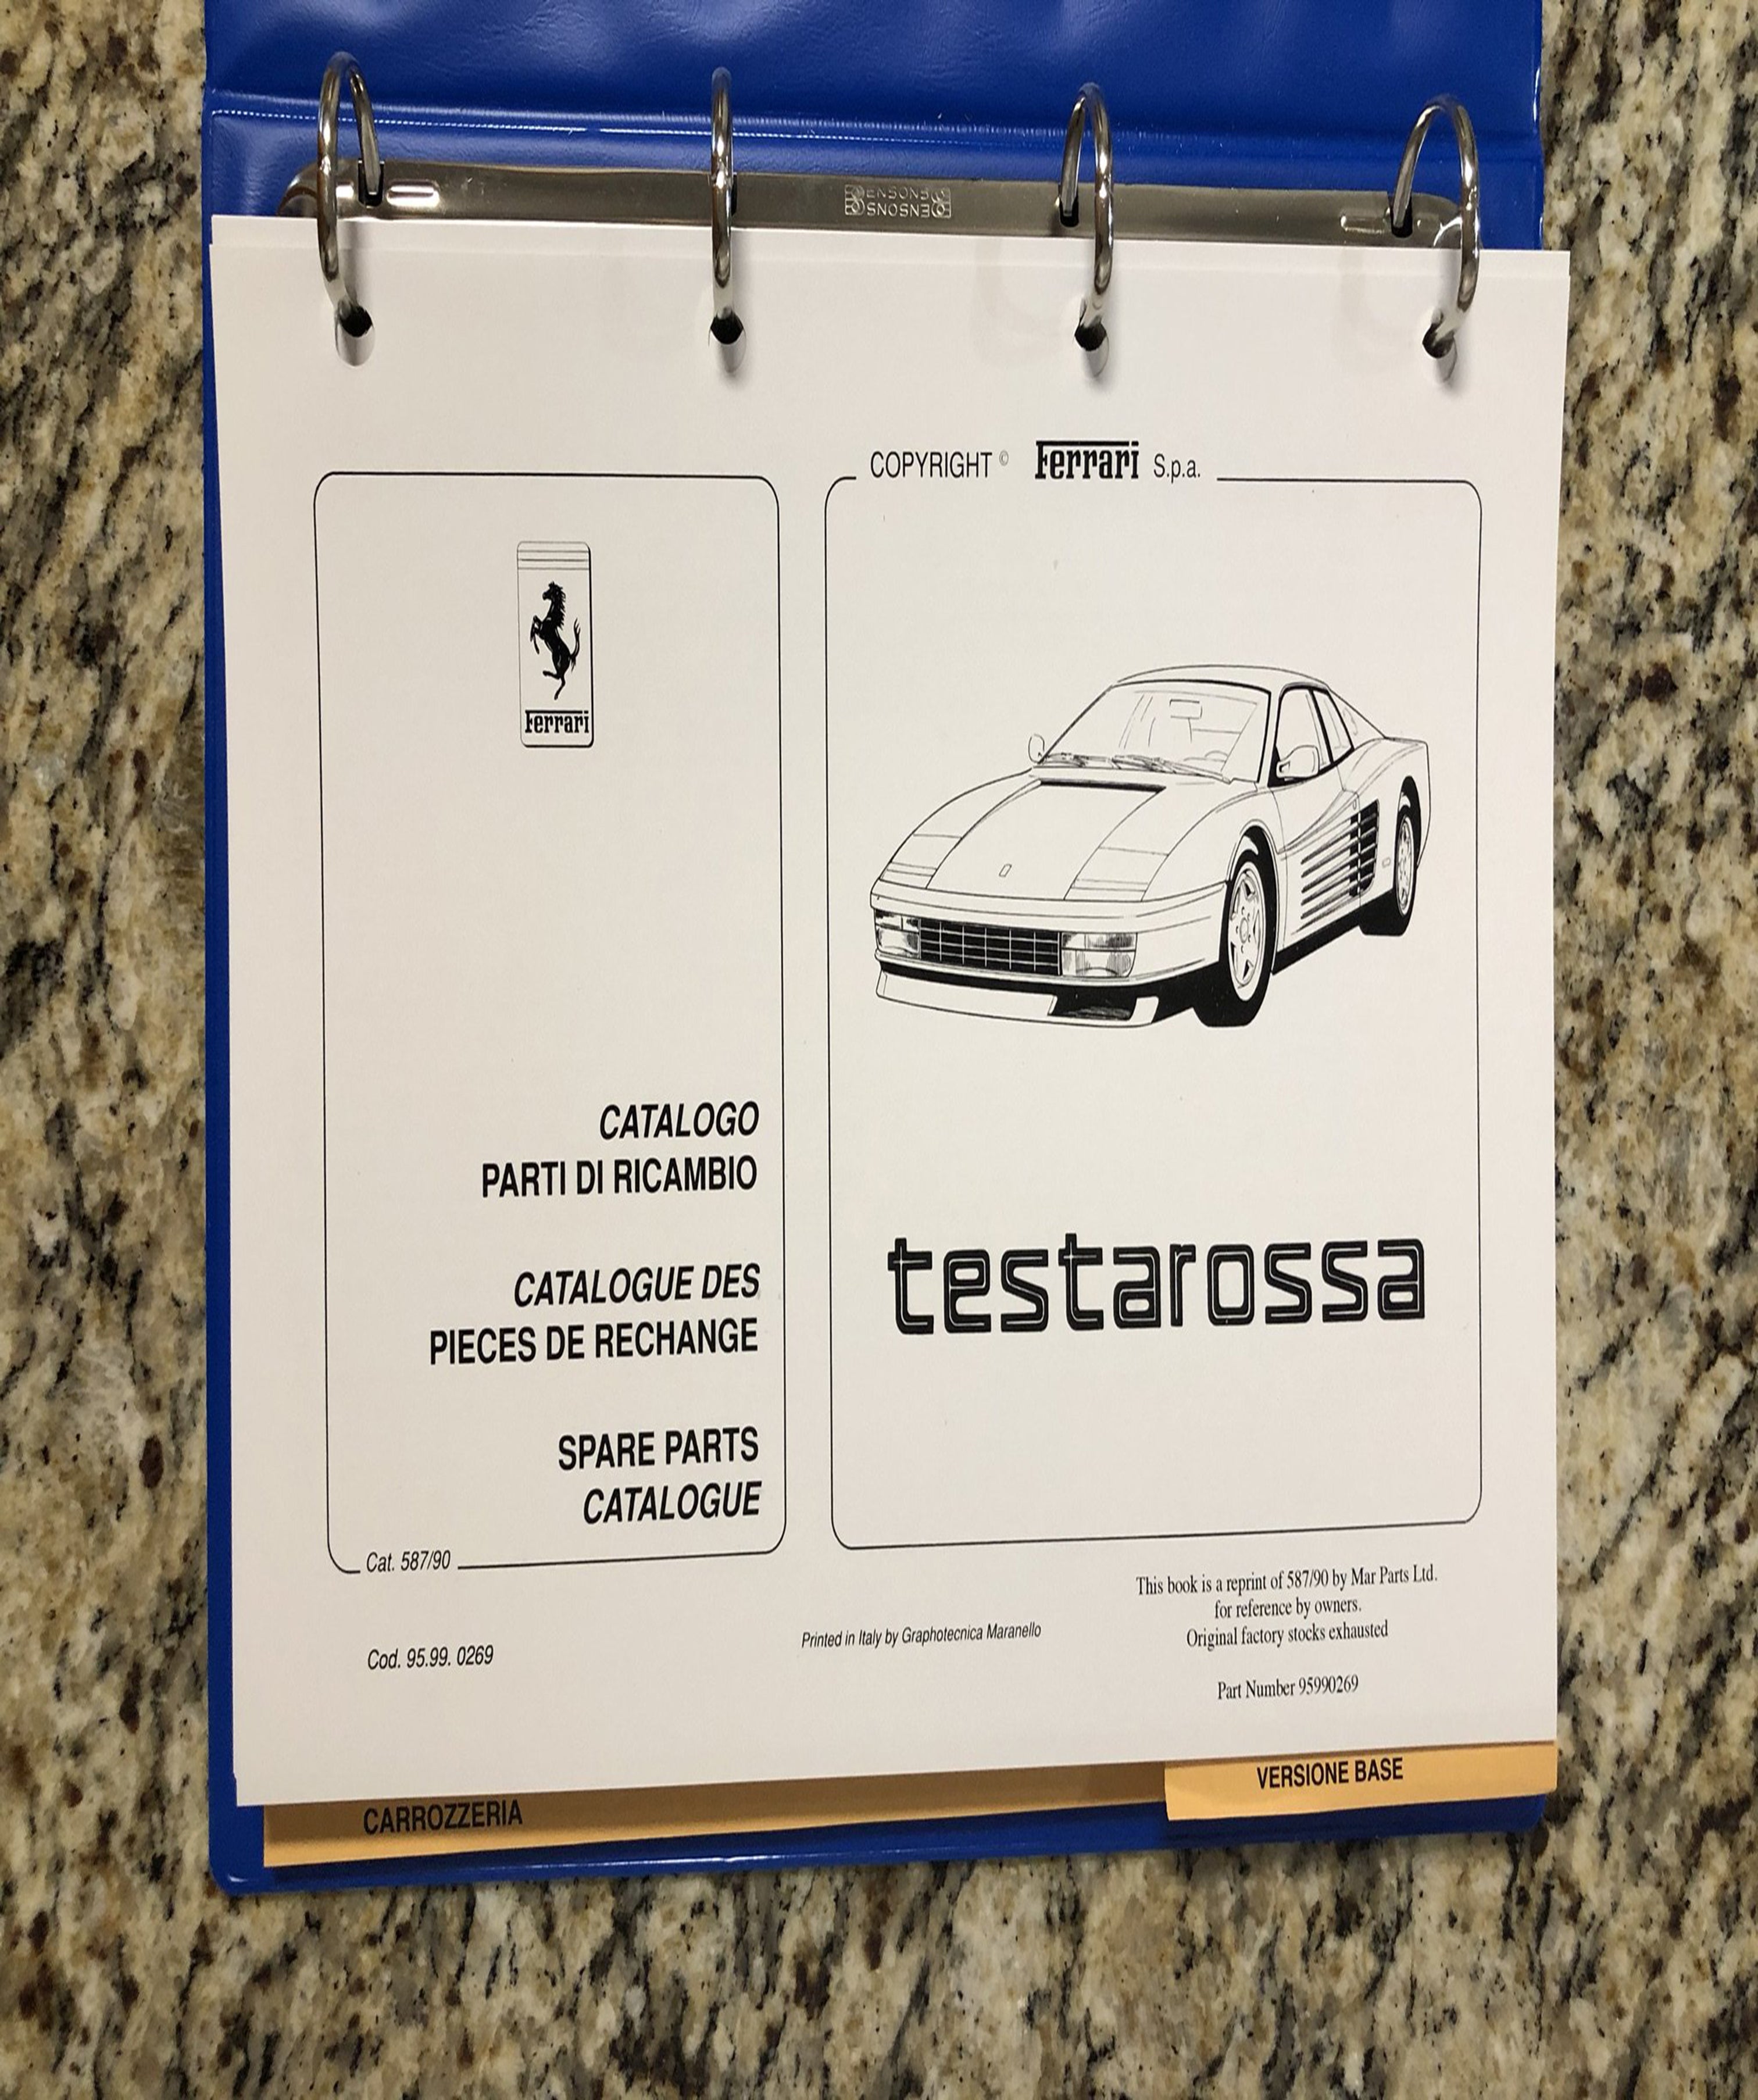 Ferrari Testarossa Spare Parts Catalogue 1990 - 587/90